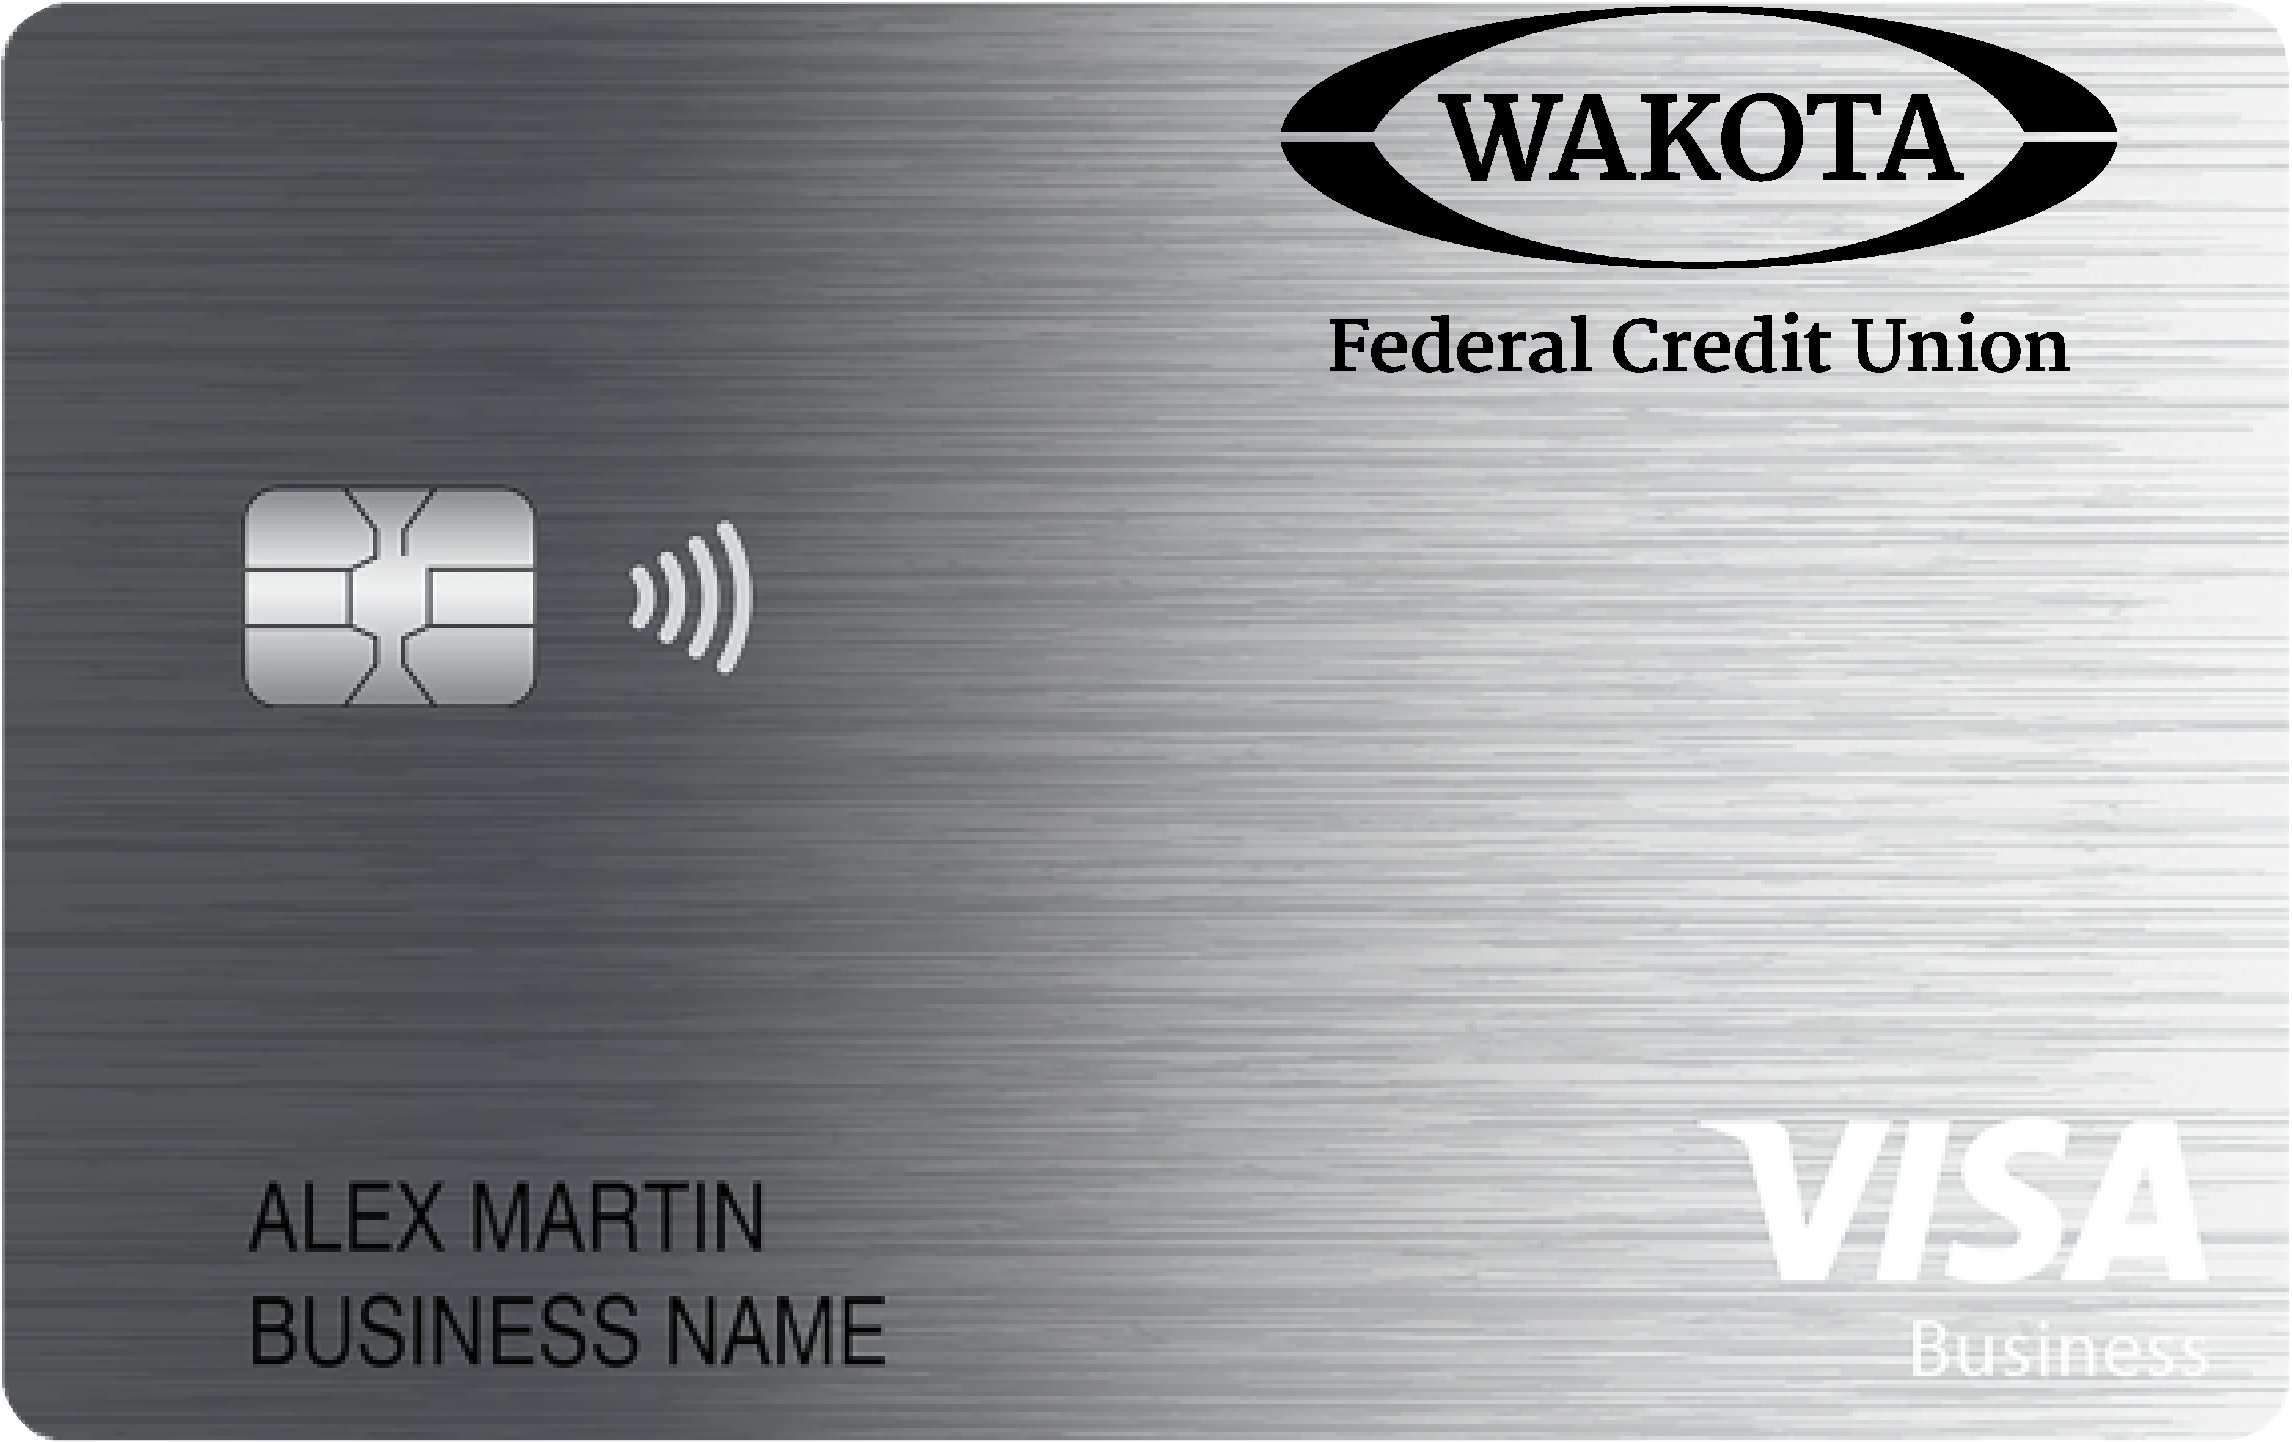 Wakota Federal Credit Union